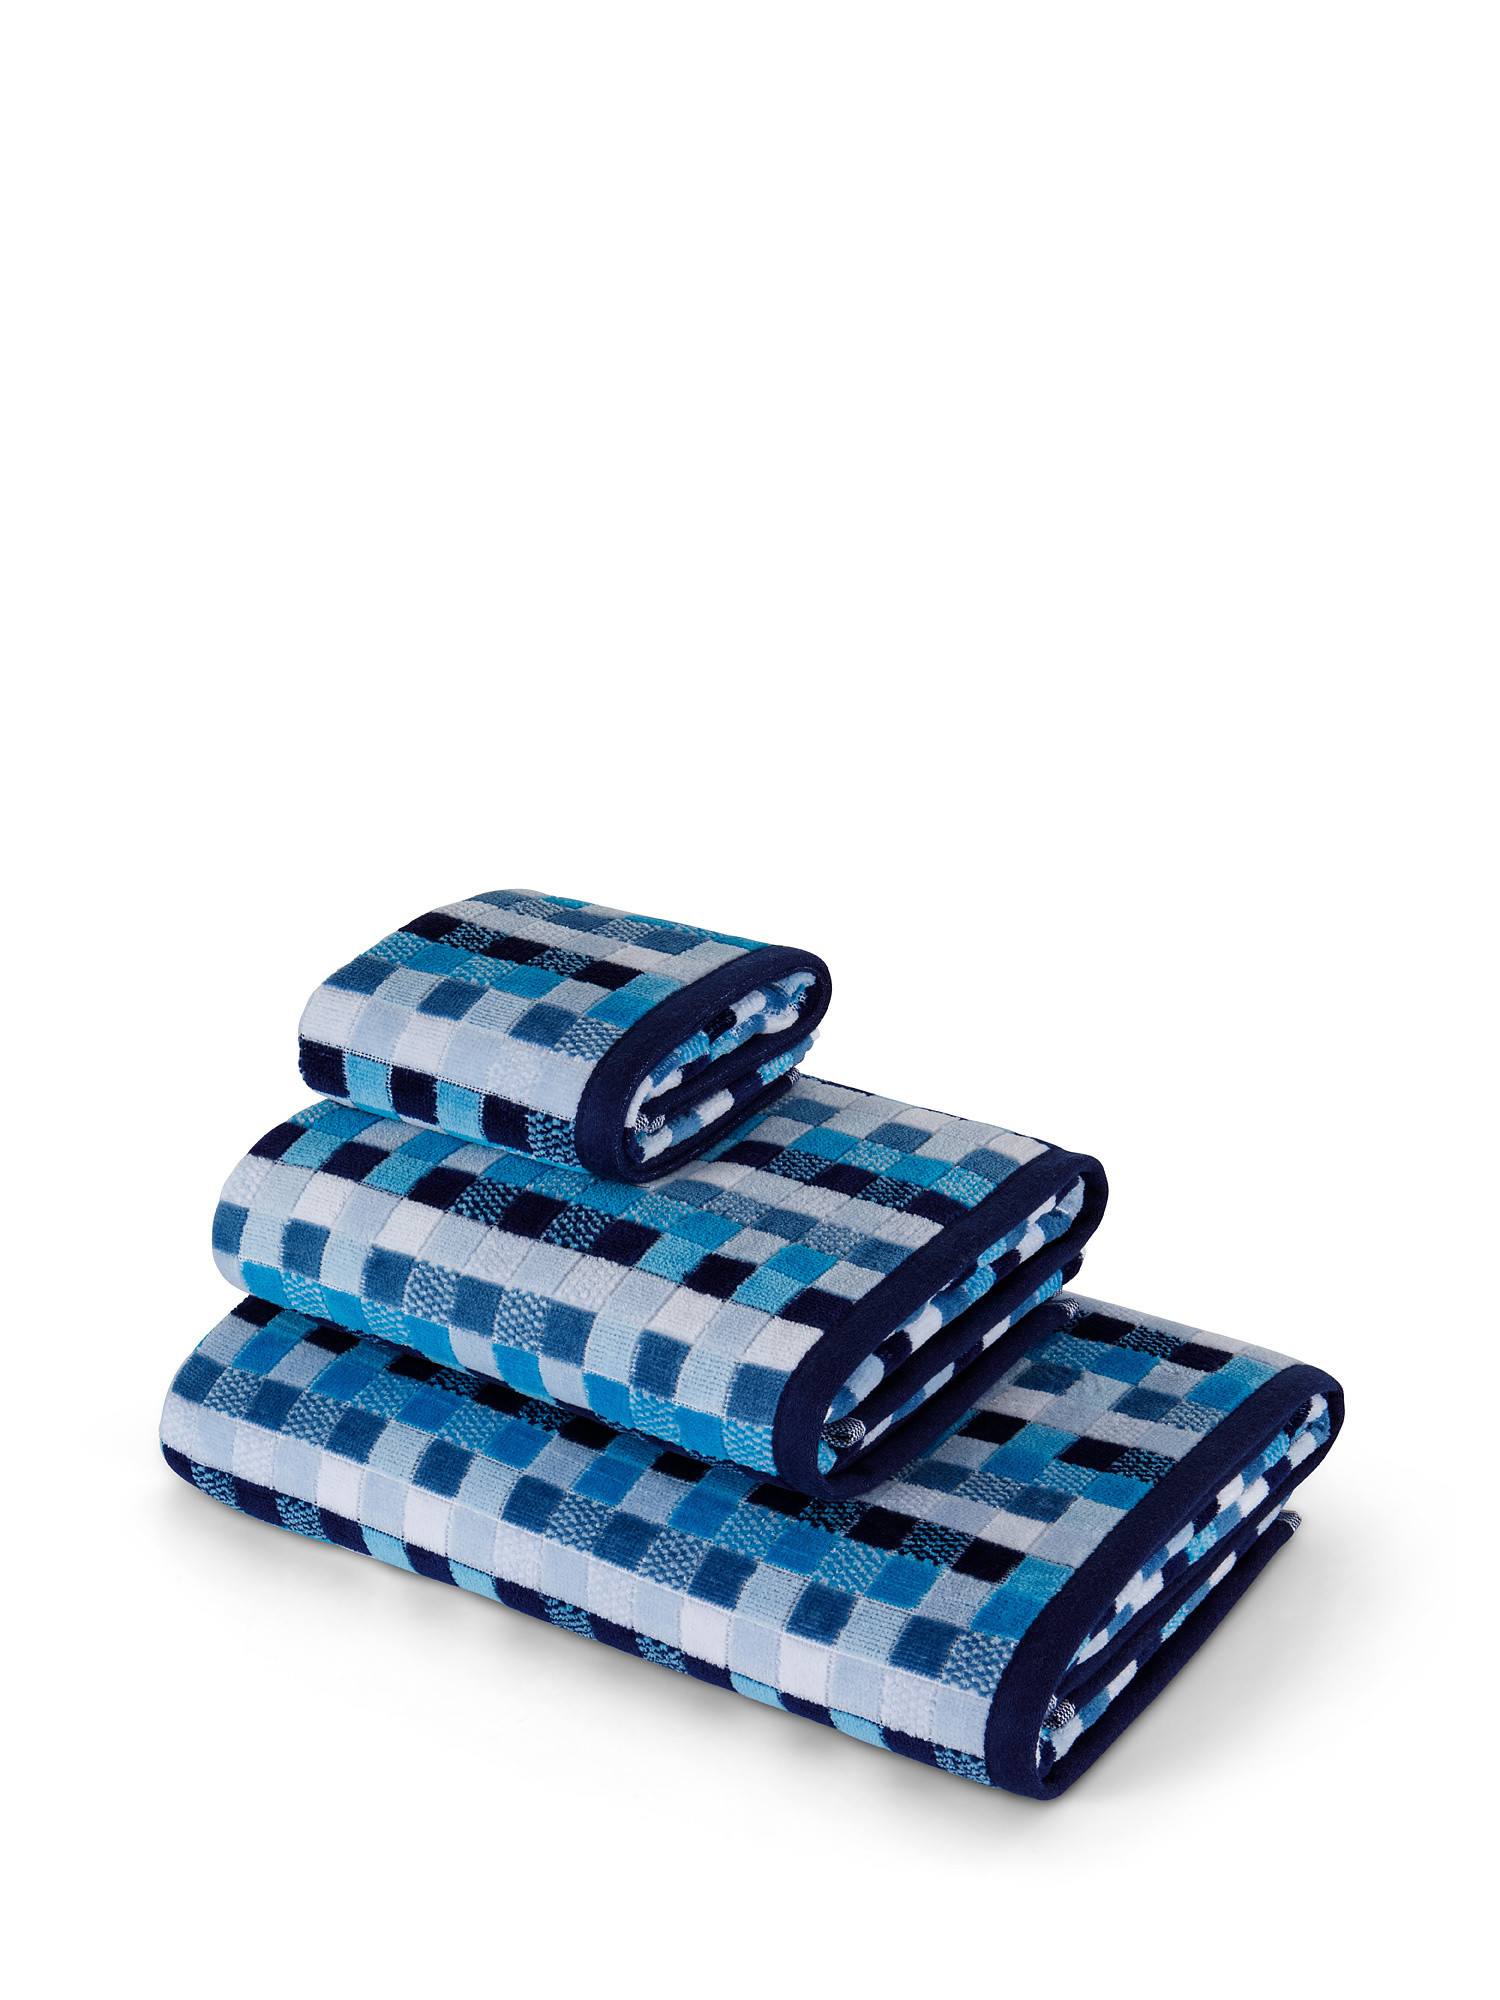 Asciugamano cotone velour motivo a mosaico, Blu, large image number 0